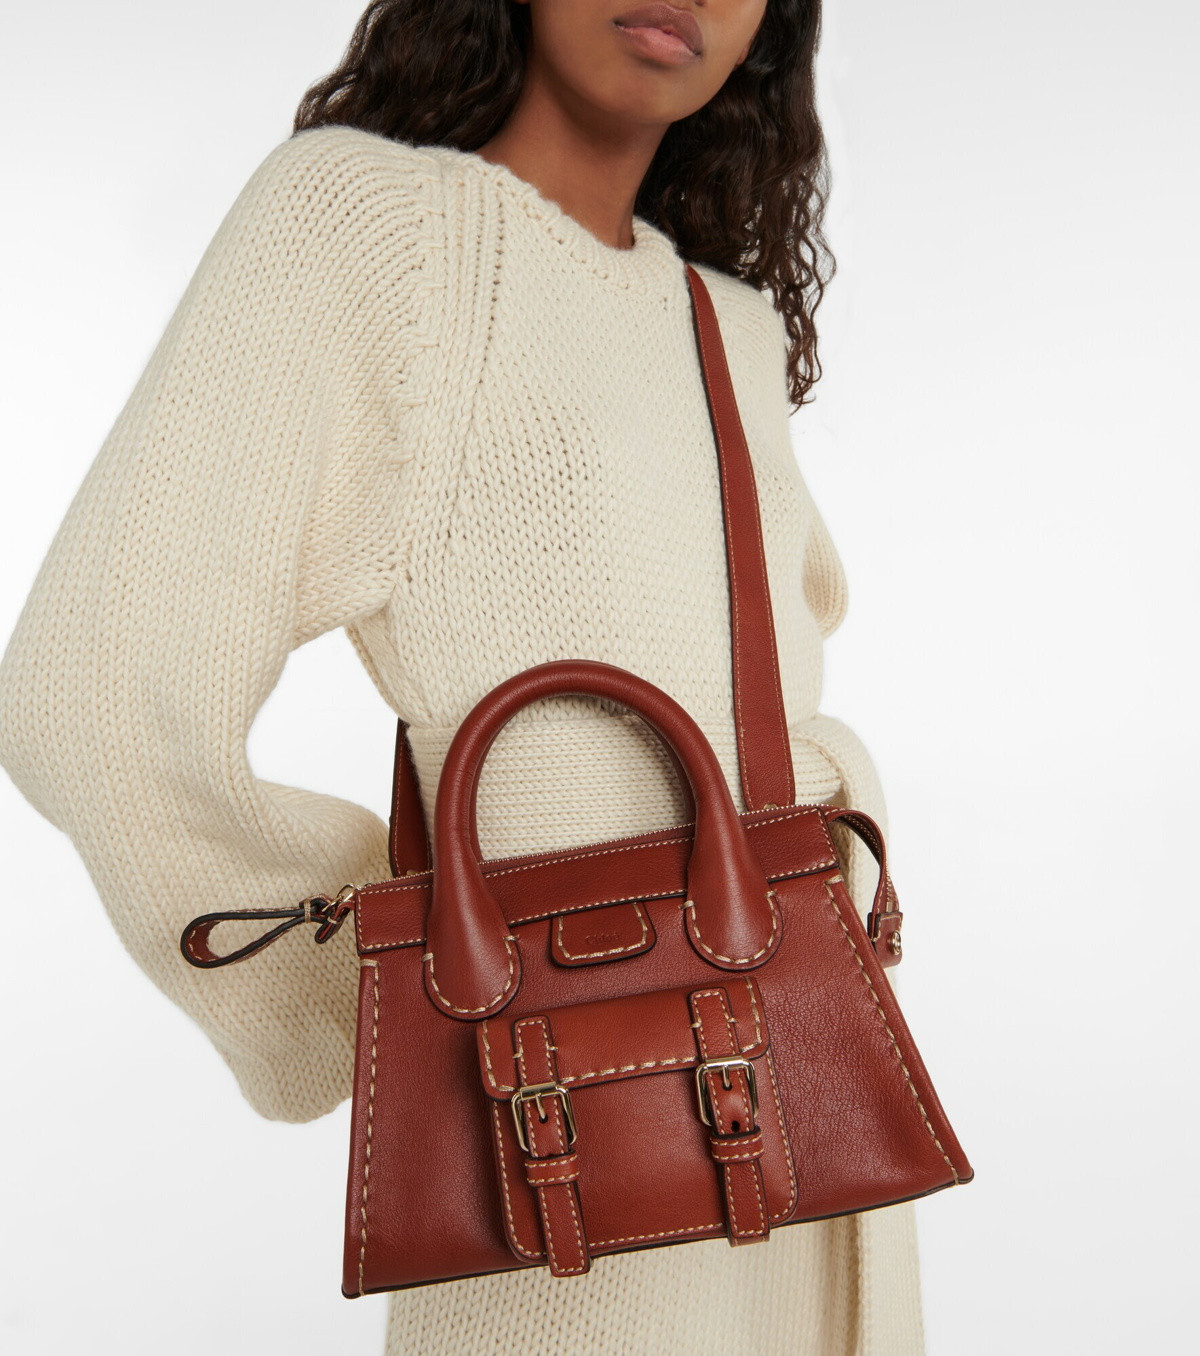 1690 New CHLOE Edith Mini Bag,ITALY,Satchel,Purse,Shoulder,Leather